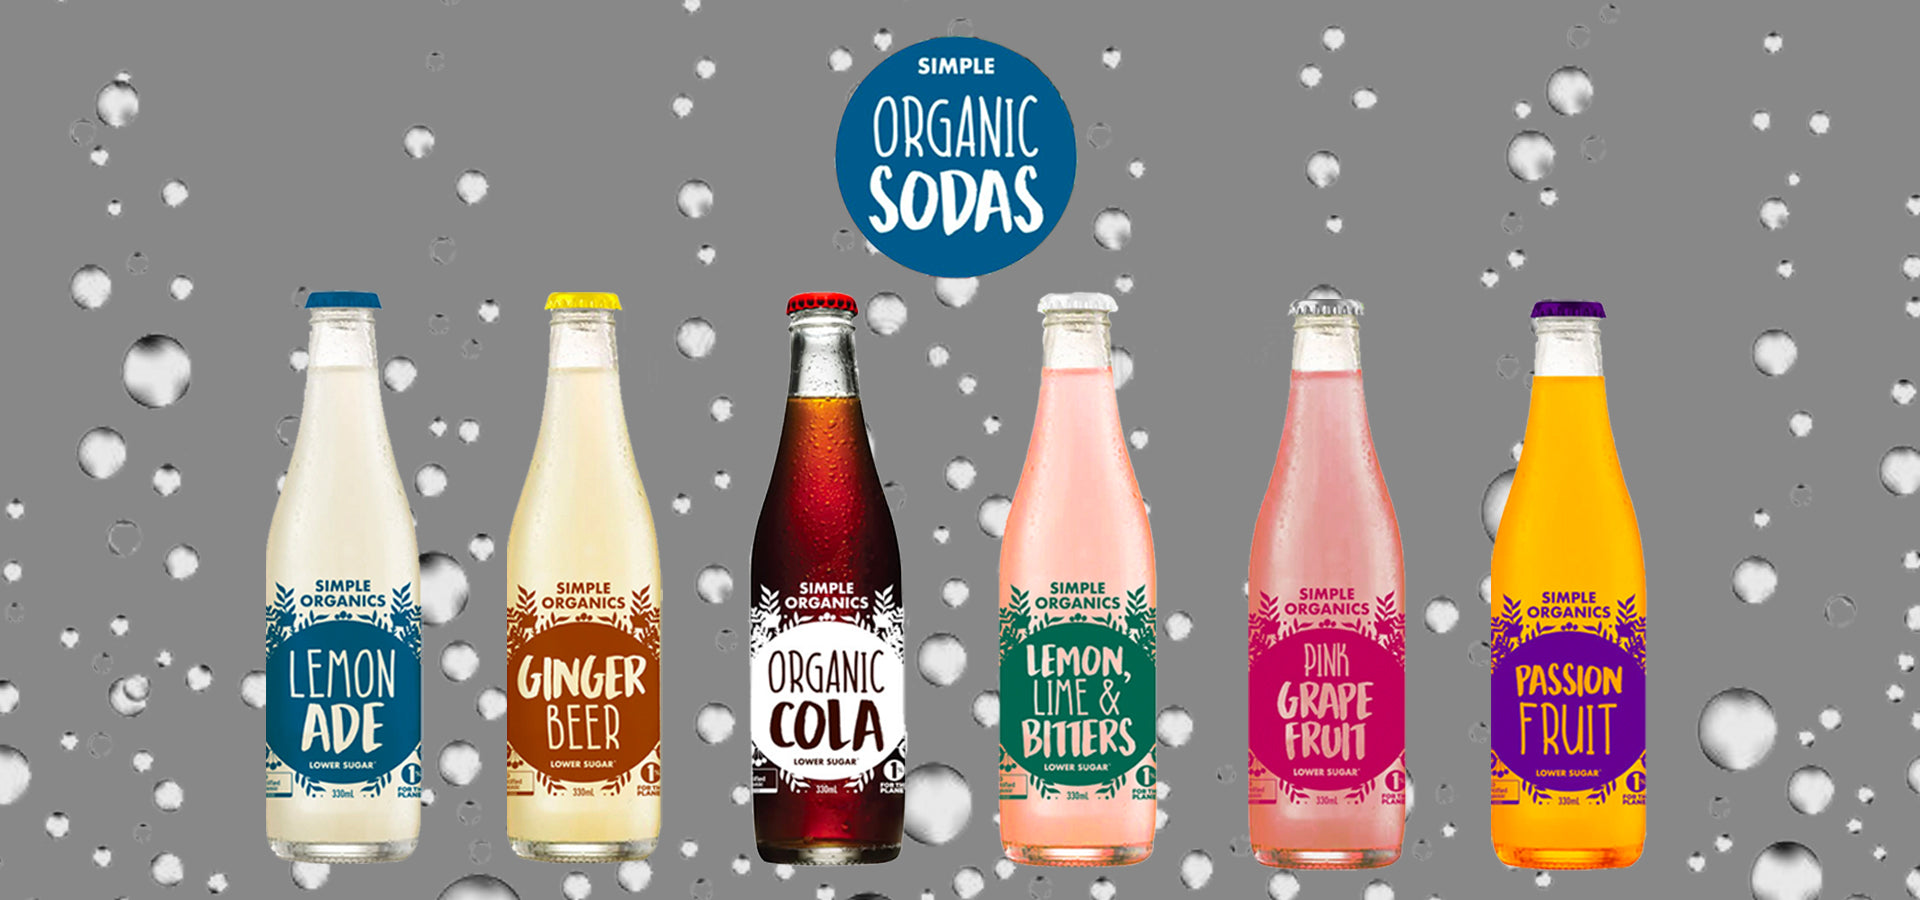 Simple Organic Sodas